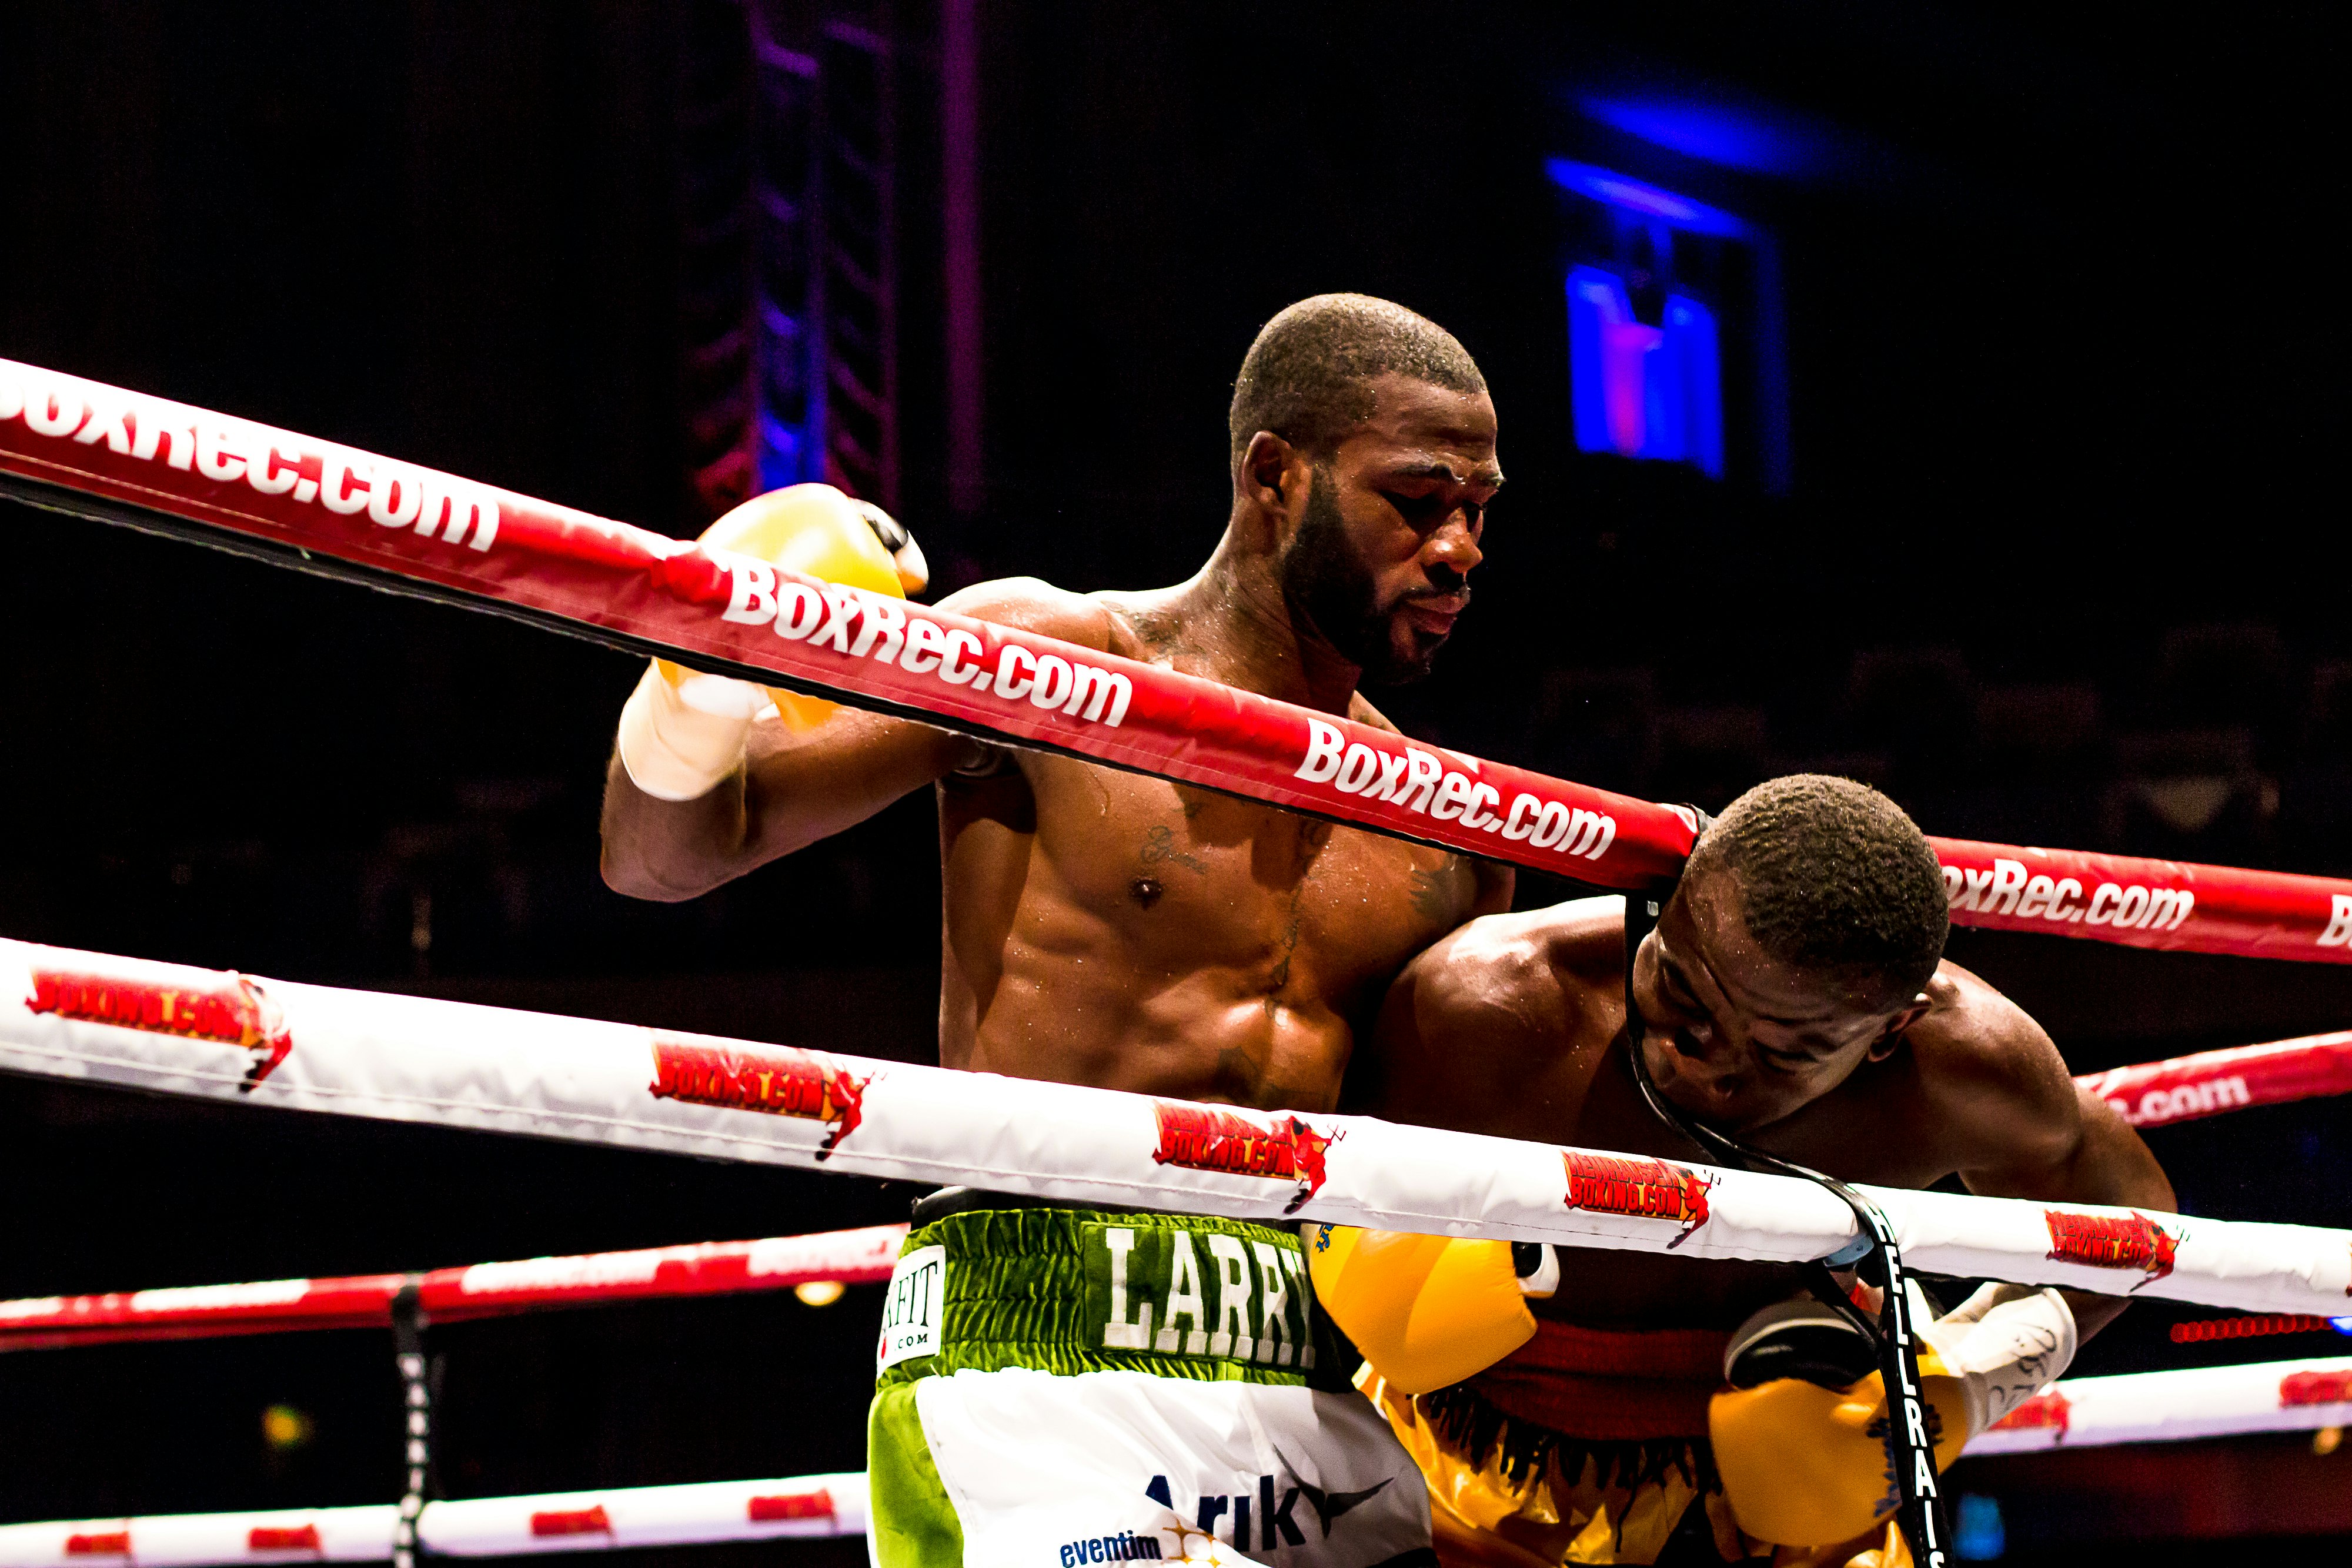 Boxers - Larry Ekundayo vs Joseph Lamptey
London, UK

Taken by Cashino NDT #CNDTPhotography